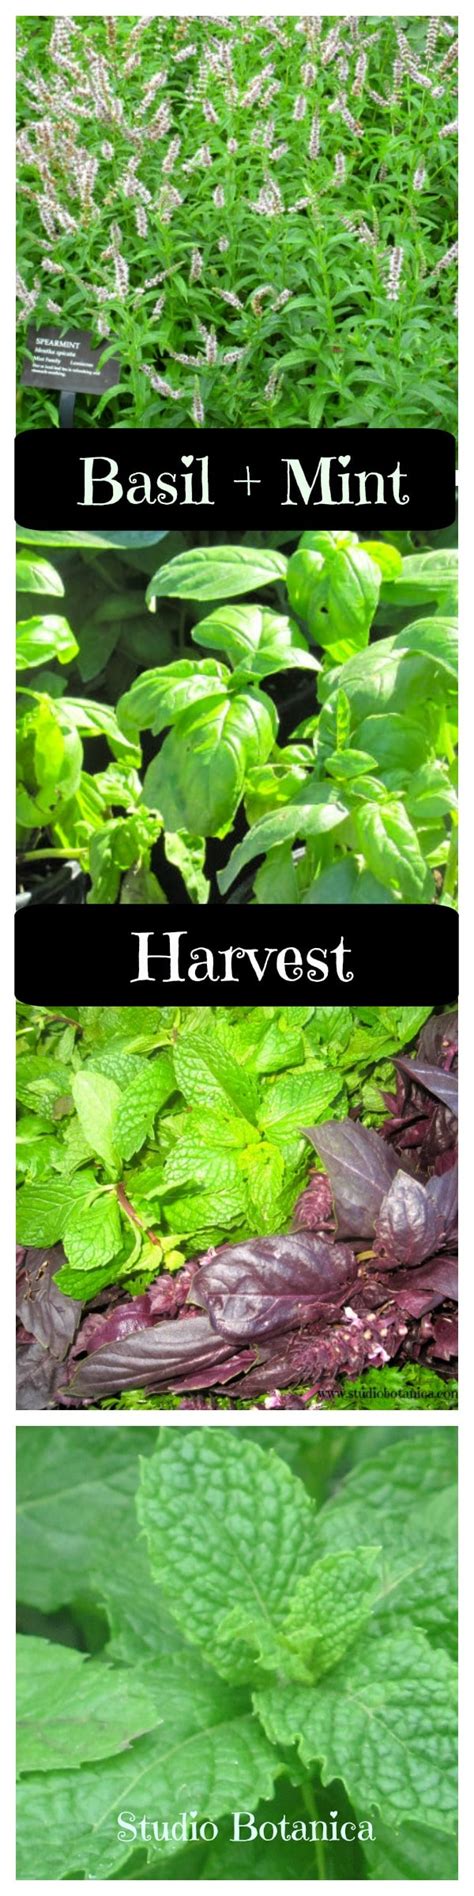 Summer Harvest Benefits Of Basil Mint Studio Botanica